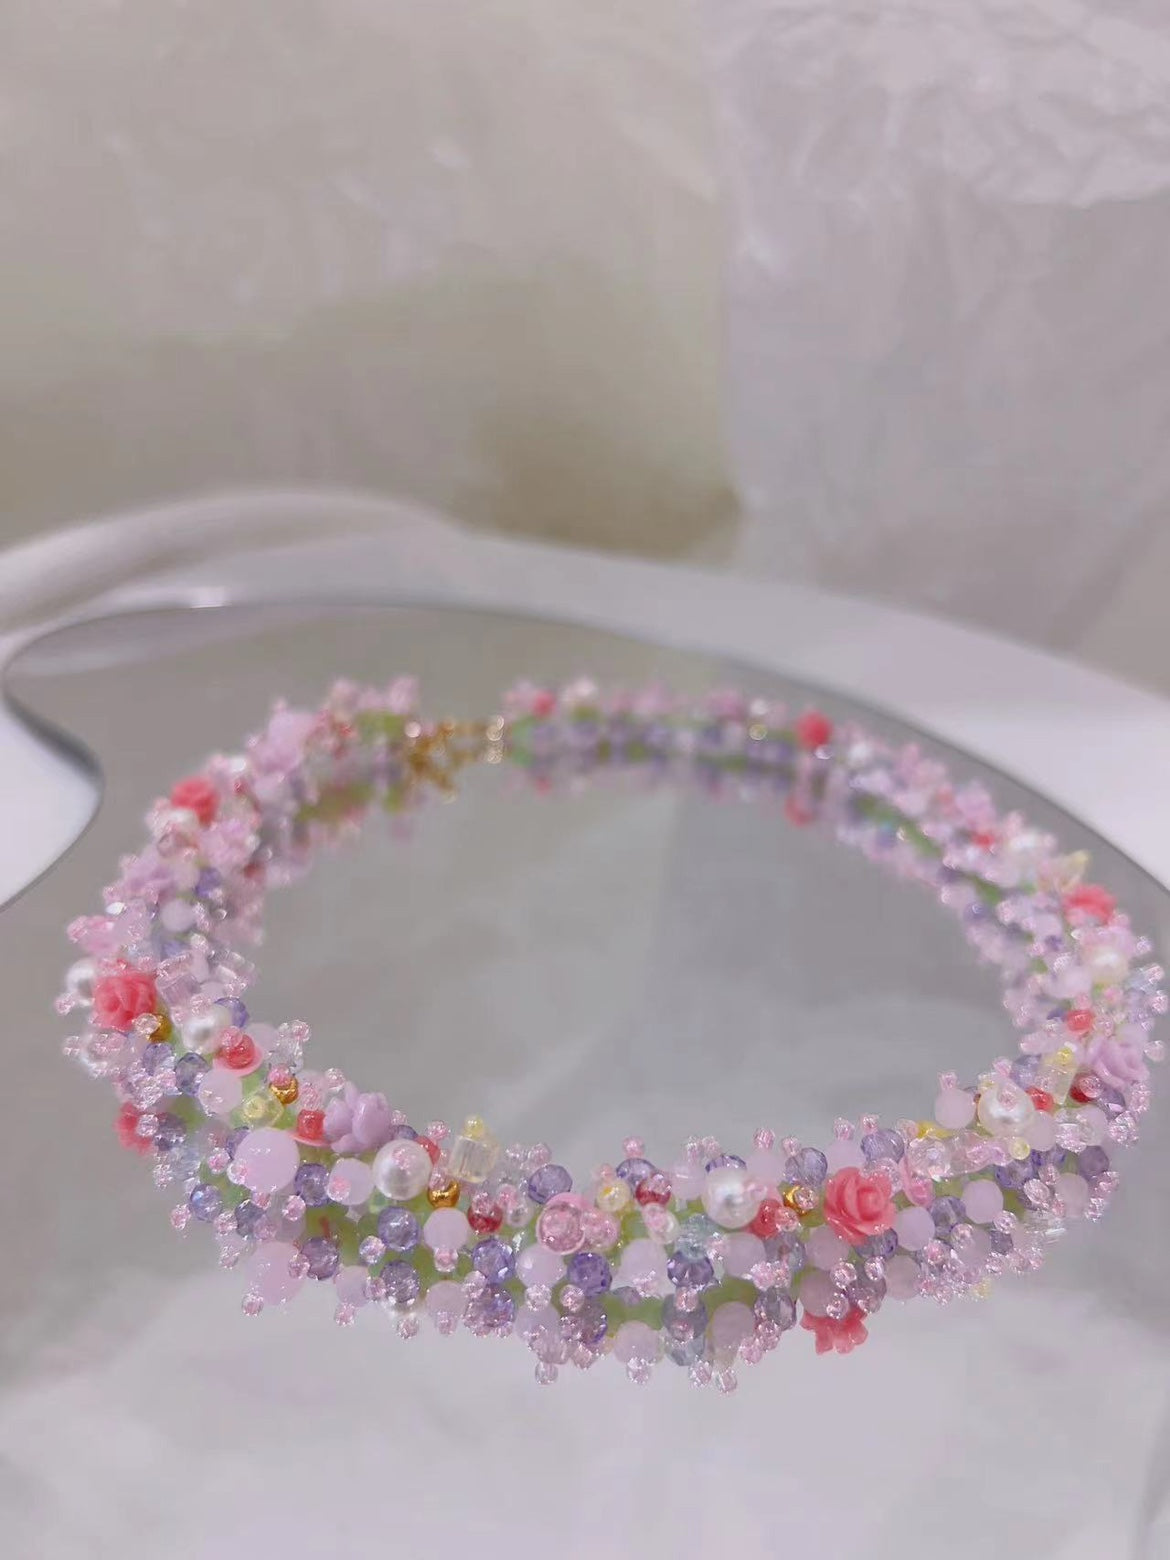 Handmade Beaded Original Design Crystal Pearl Necklace Bracelet Girly Fashion Personality